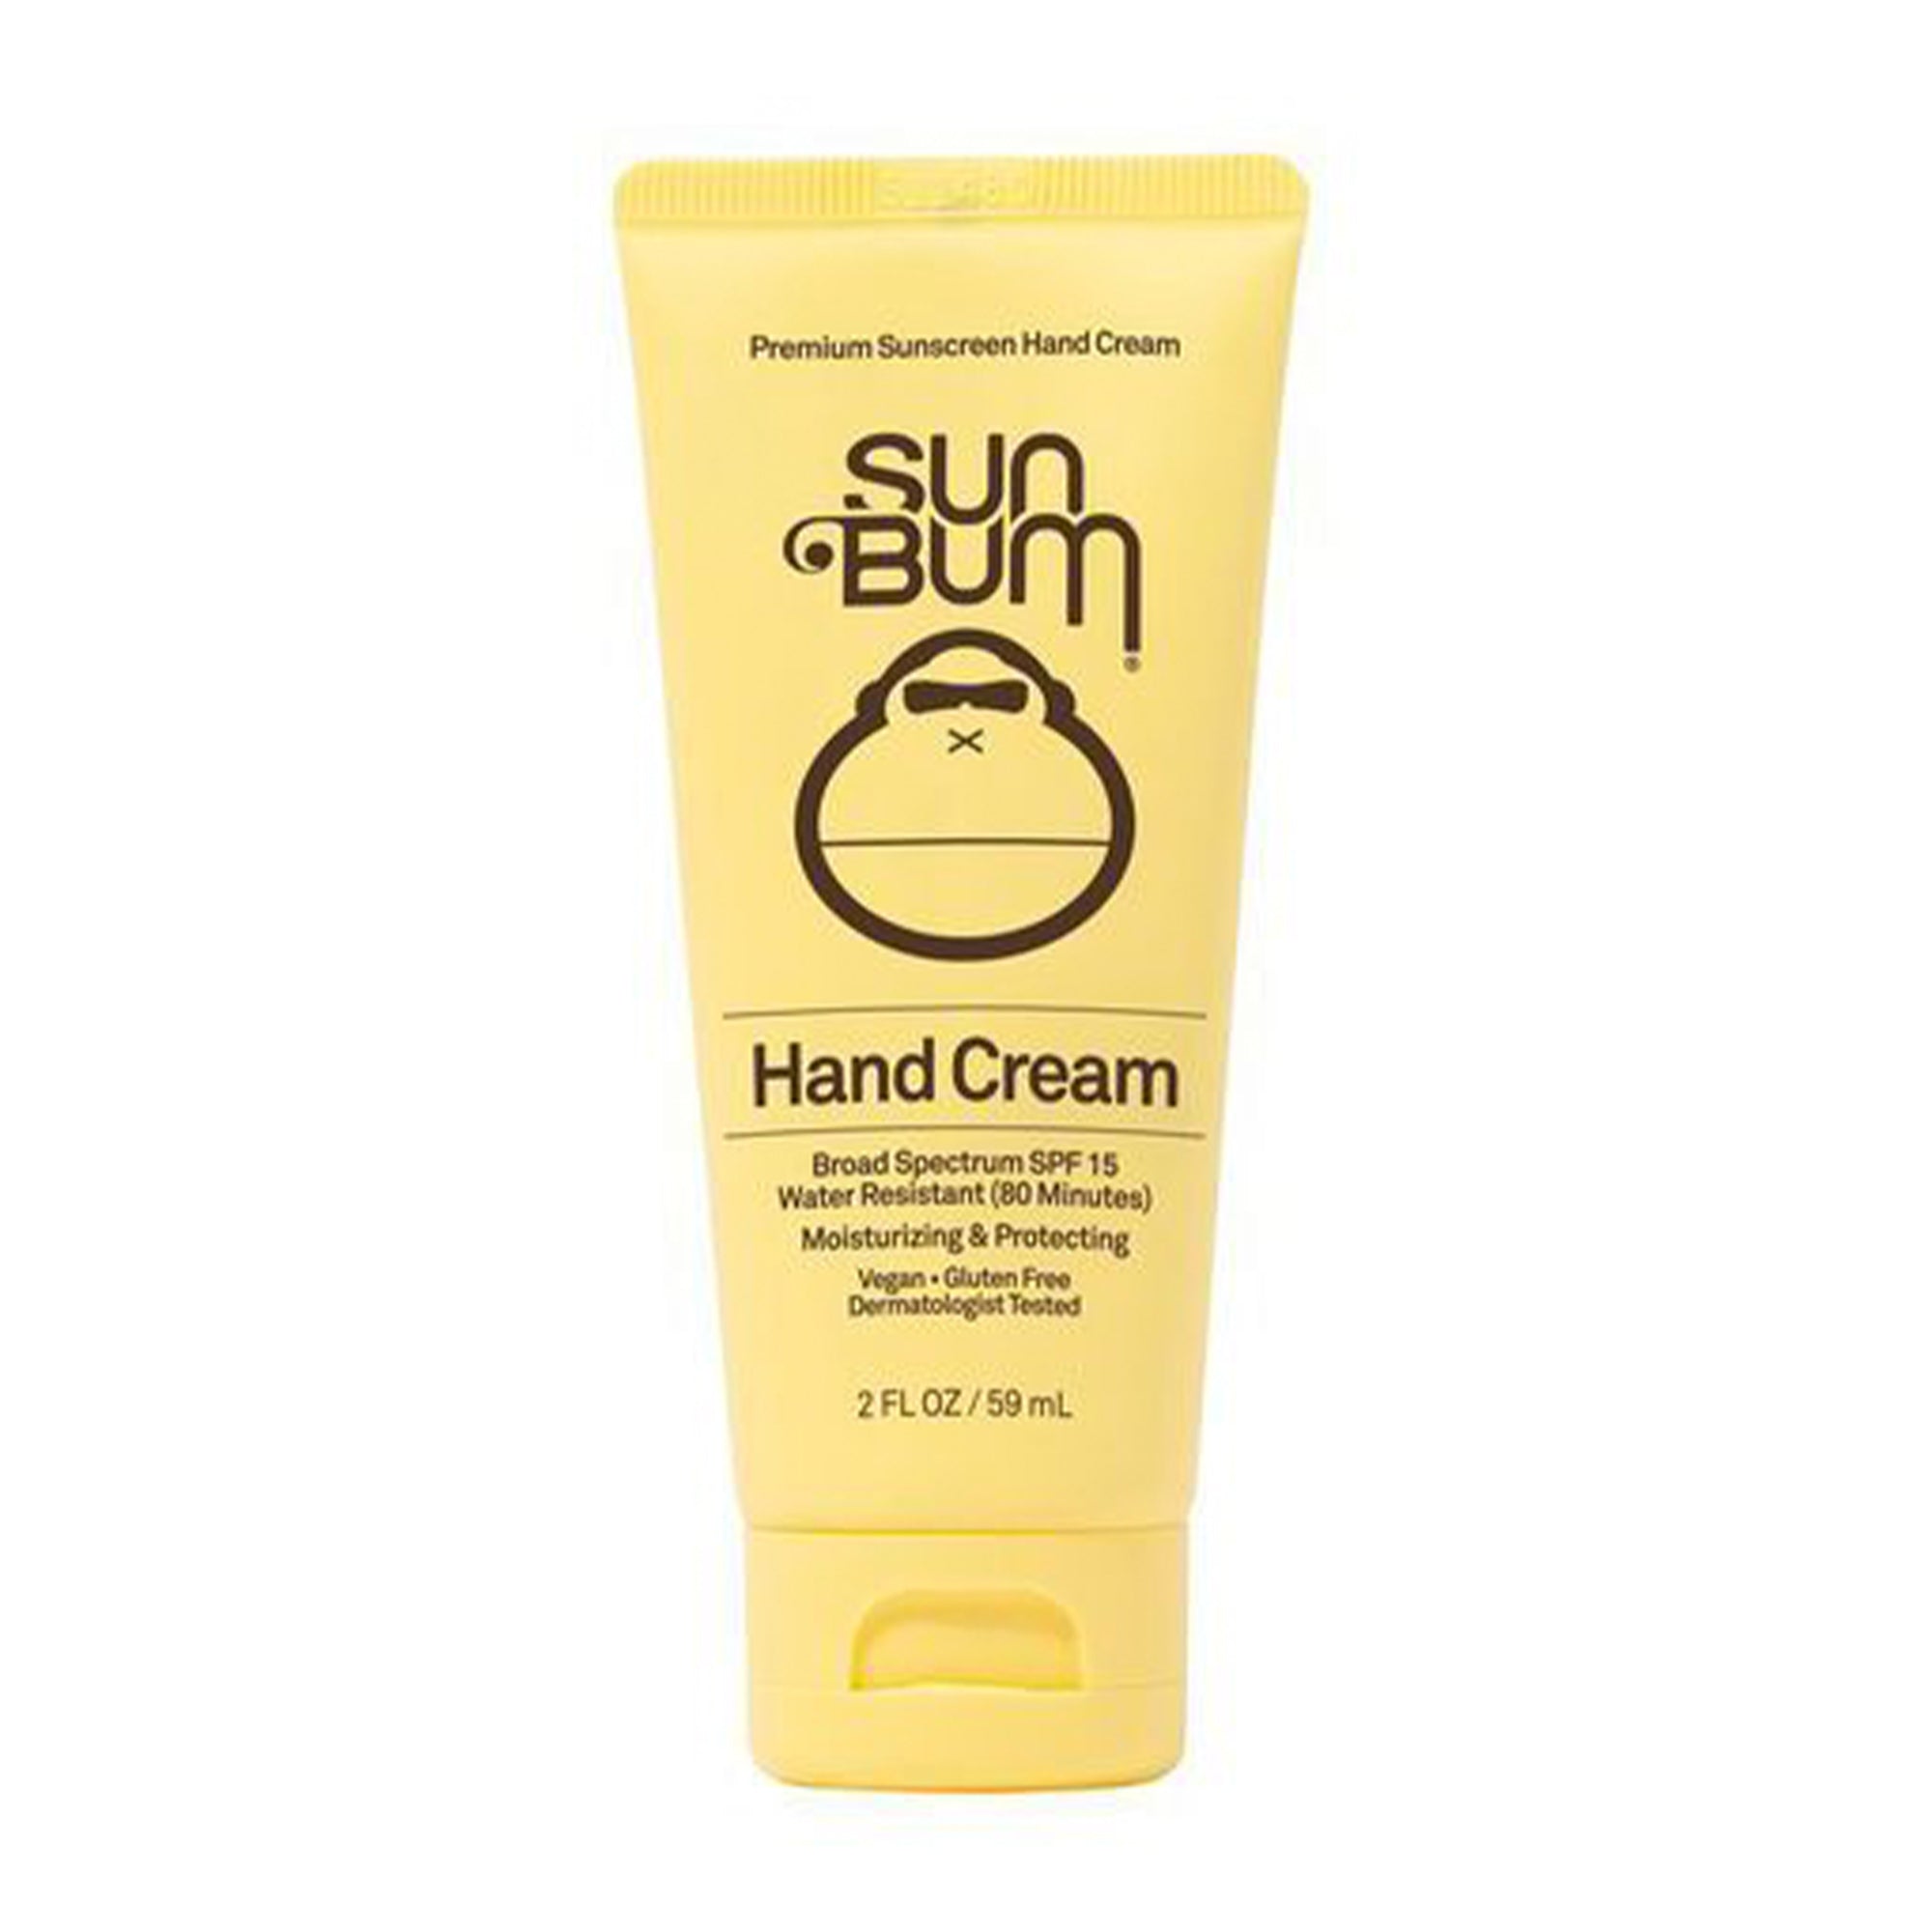 Sun Bum Hand Cream SPF 15, 2 fl oz